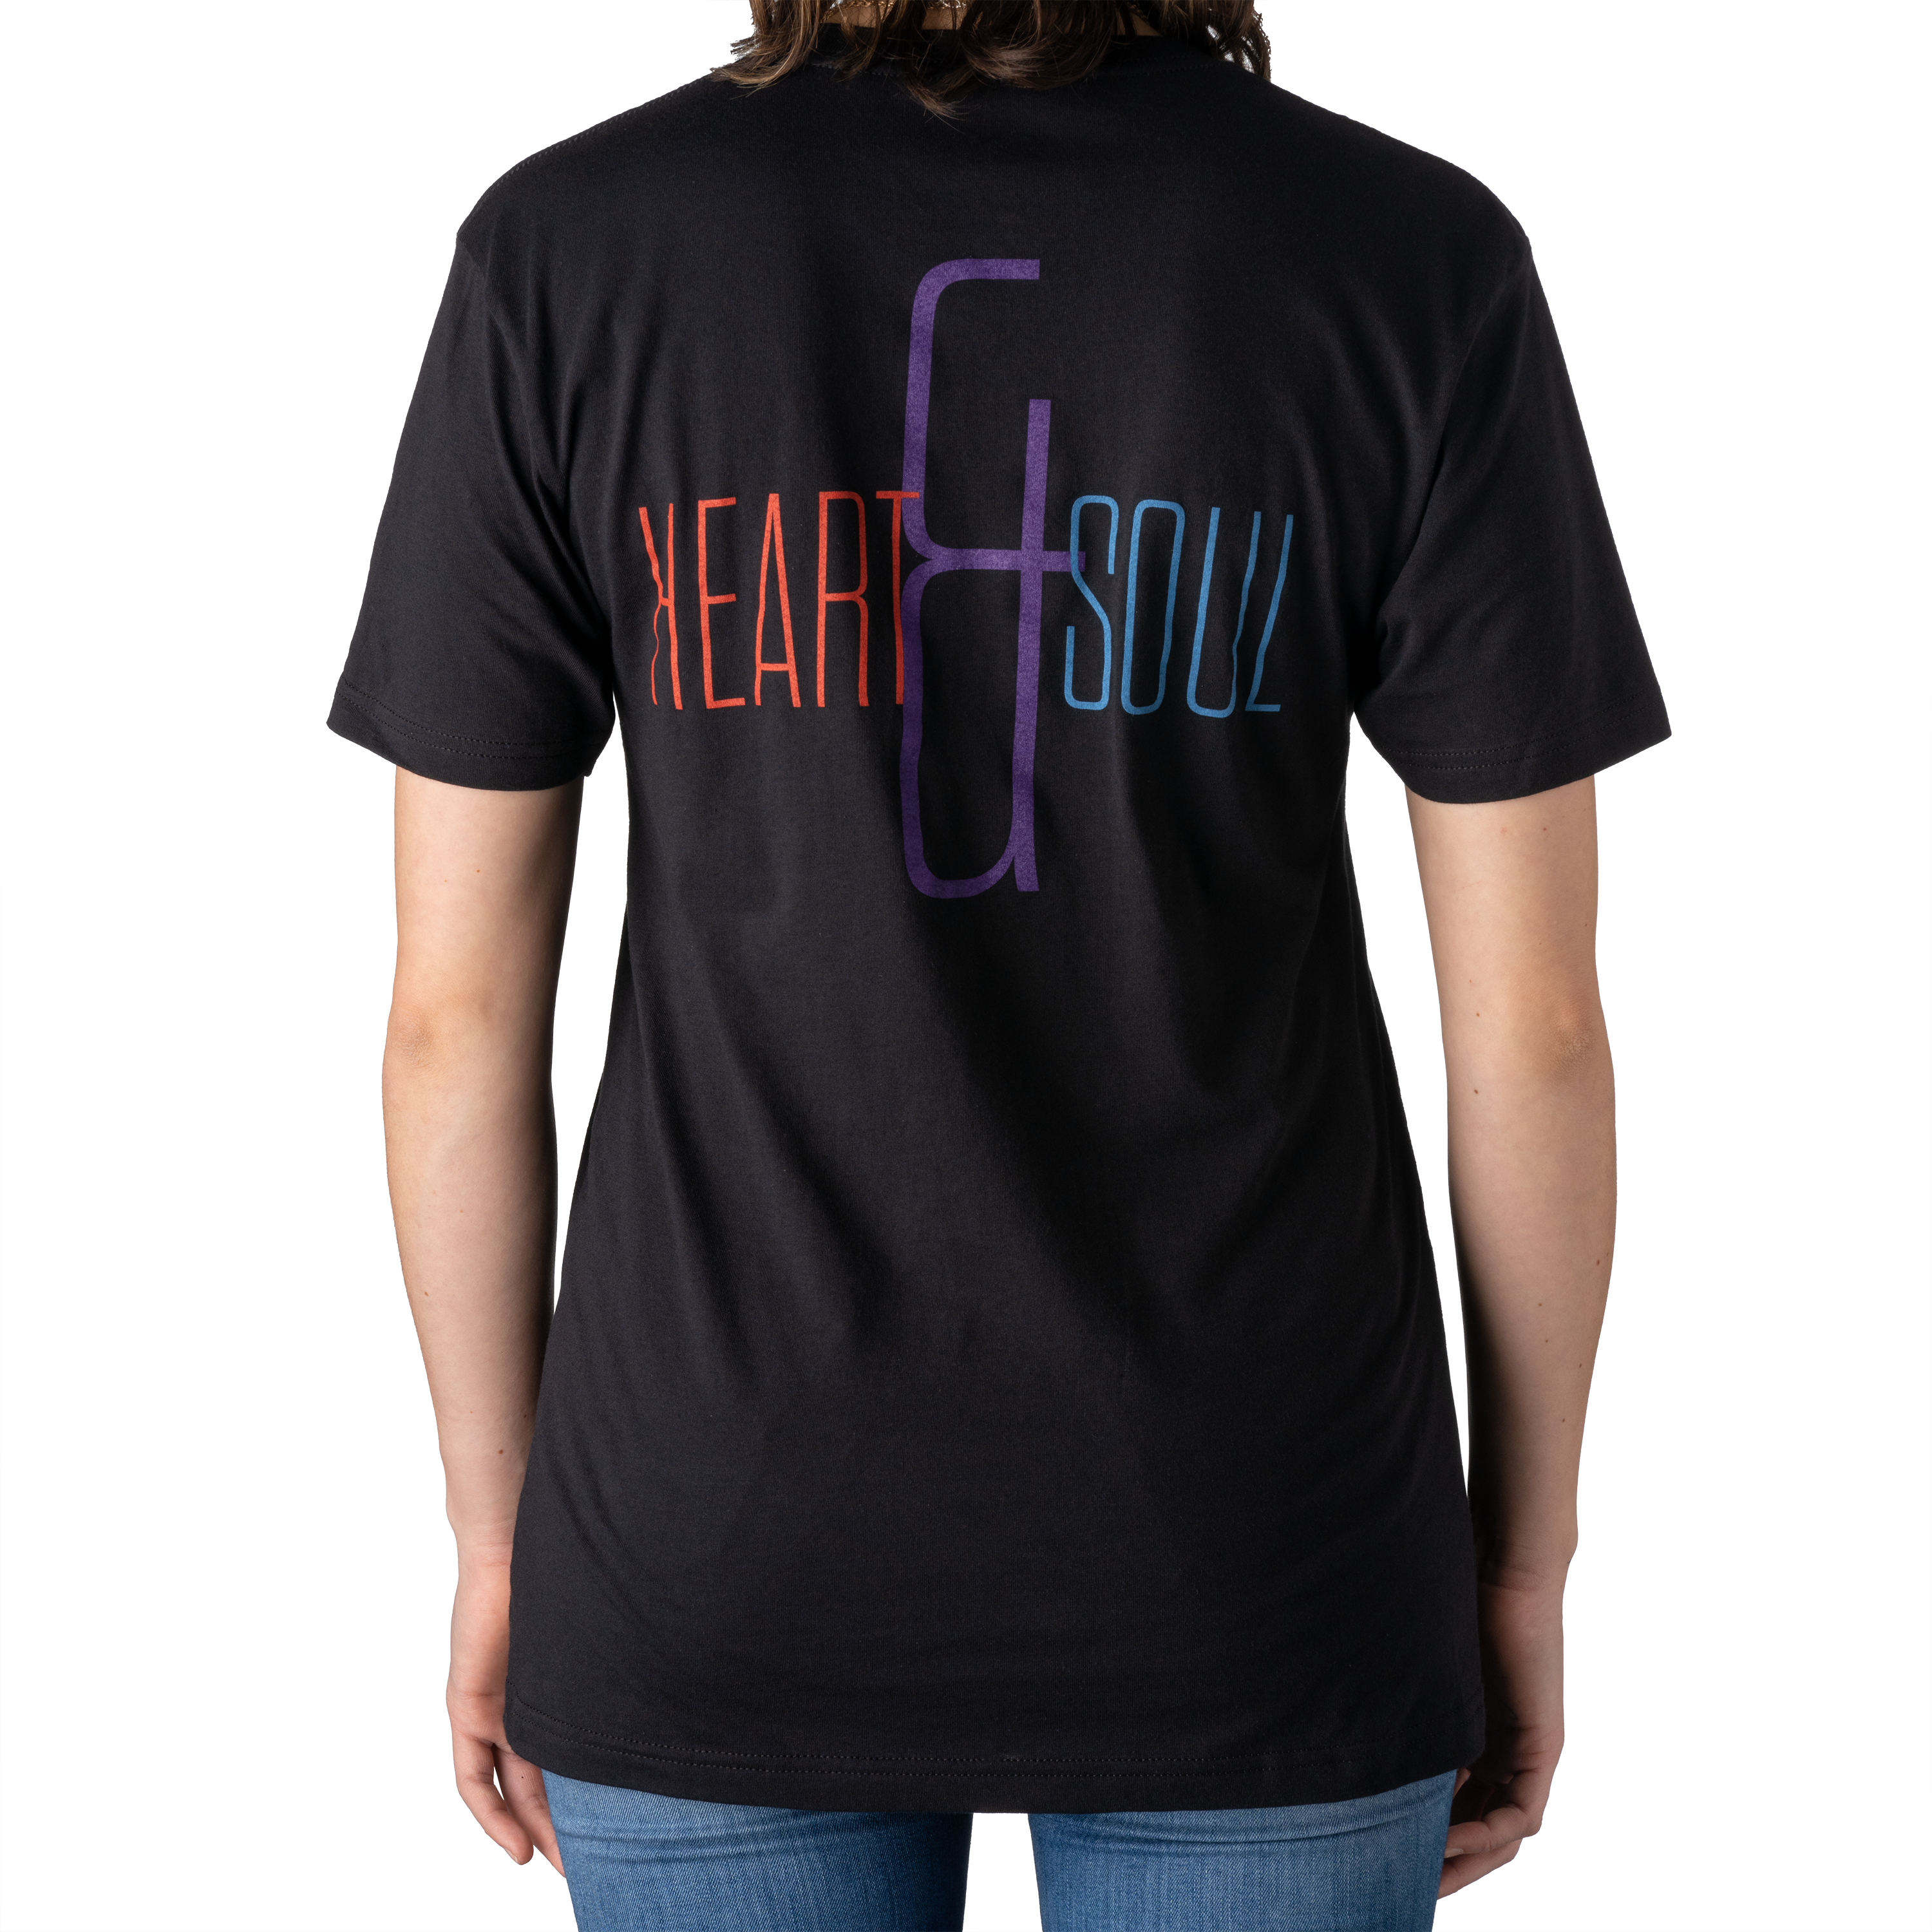 Heart & Soul Title T-Shirt